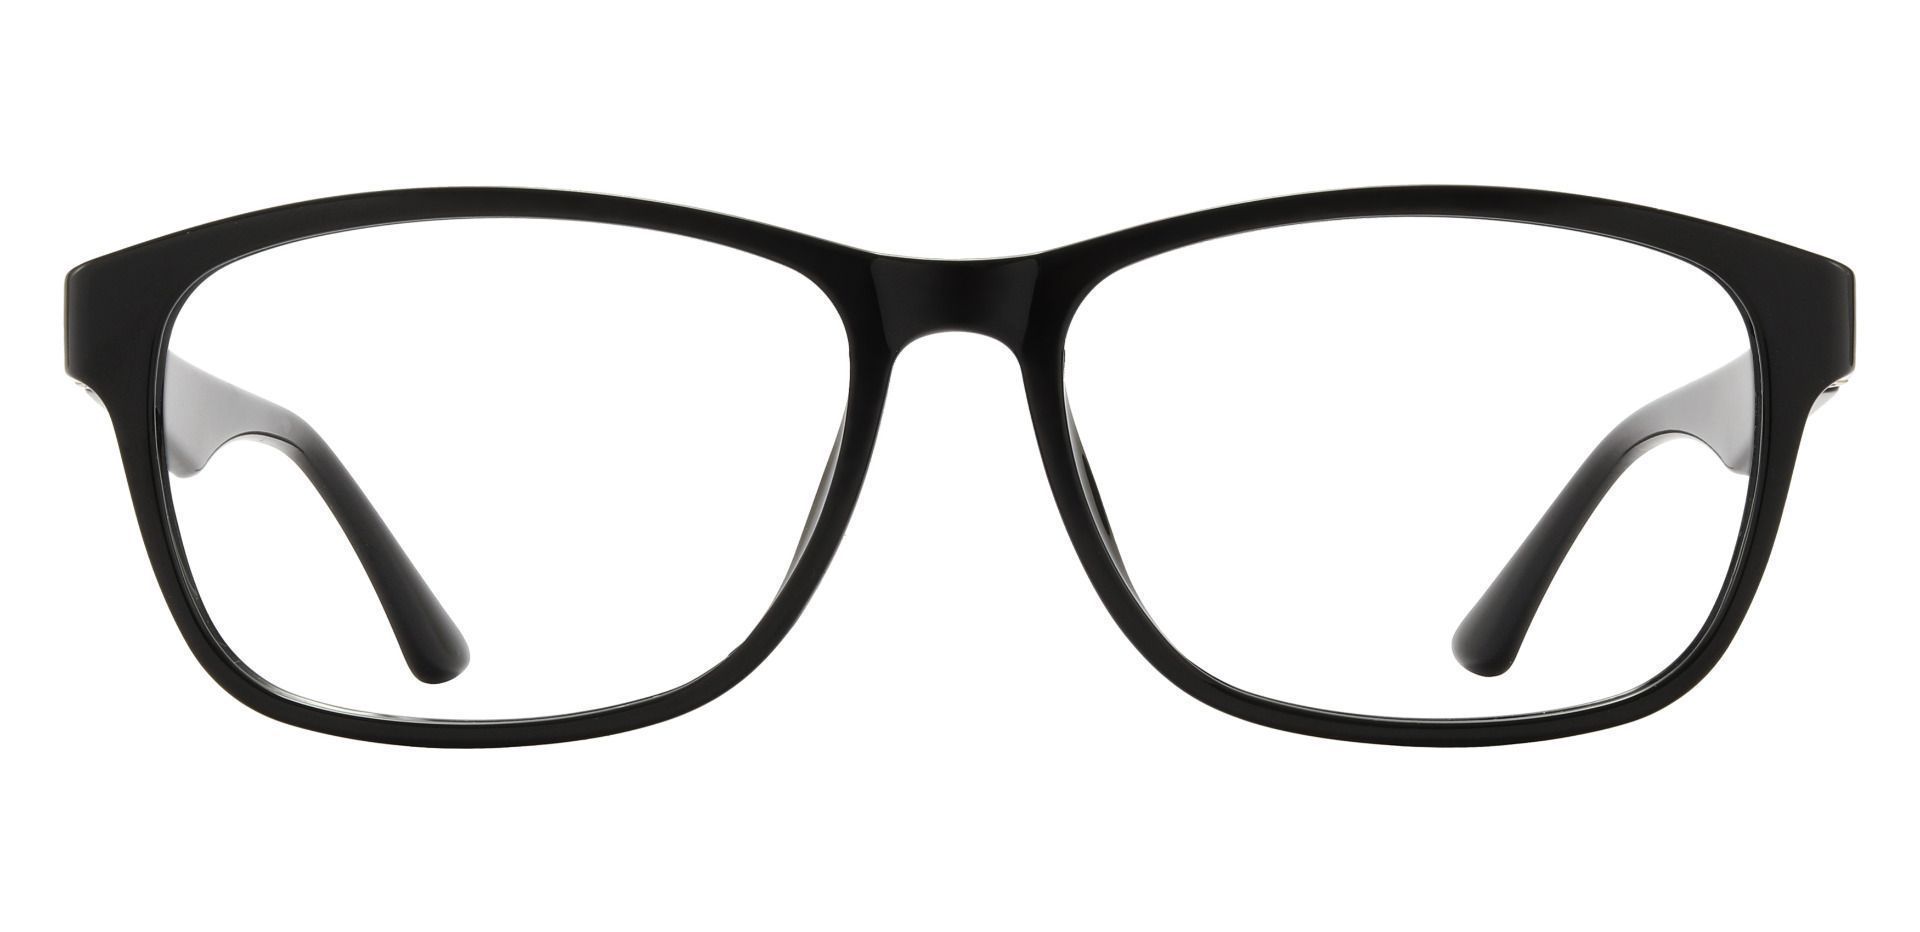 Perkins Rectangle Prescription Glasses - Black